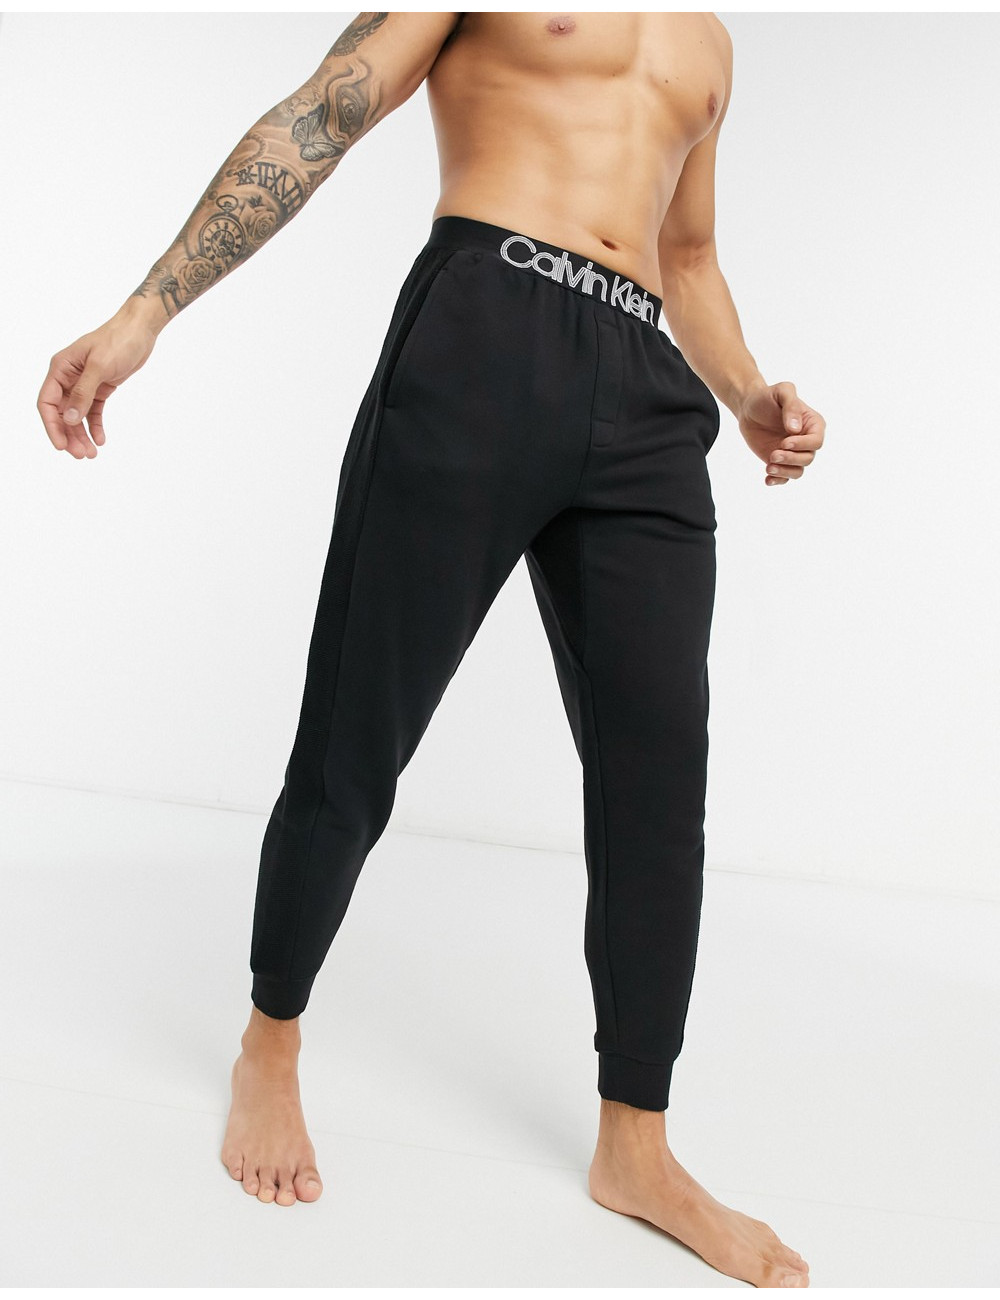 Calvin Klein jogger in black